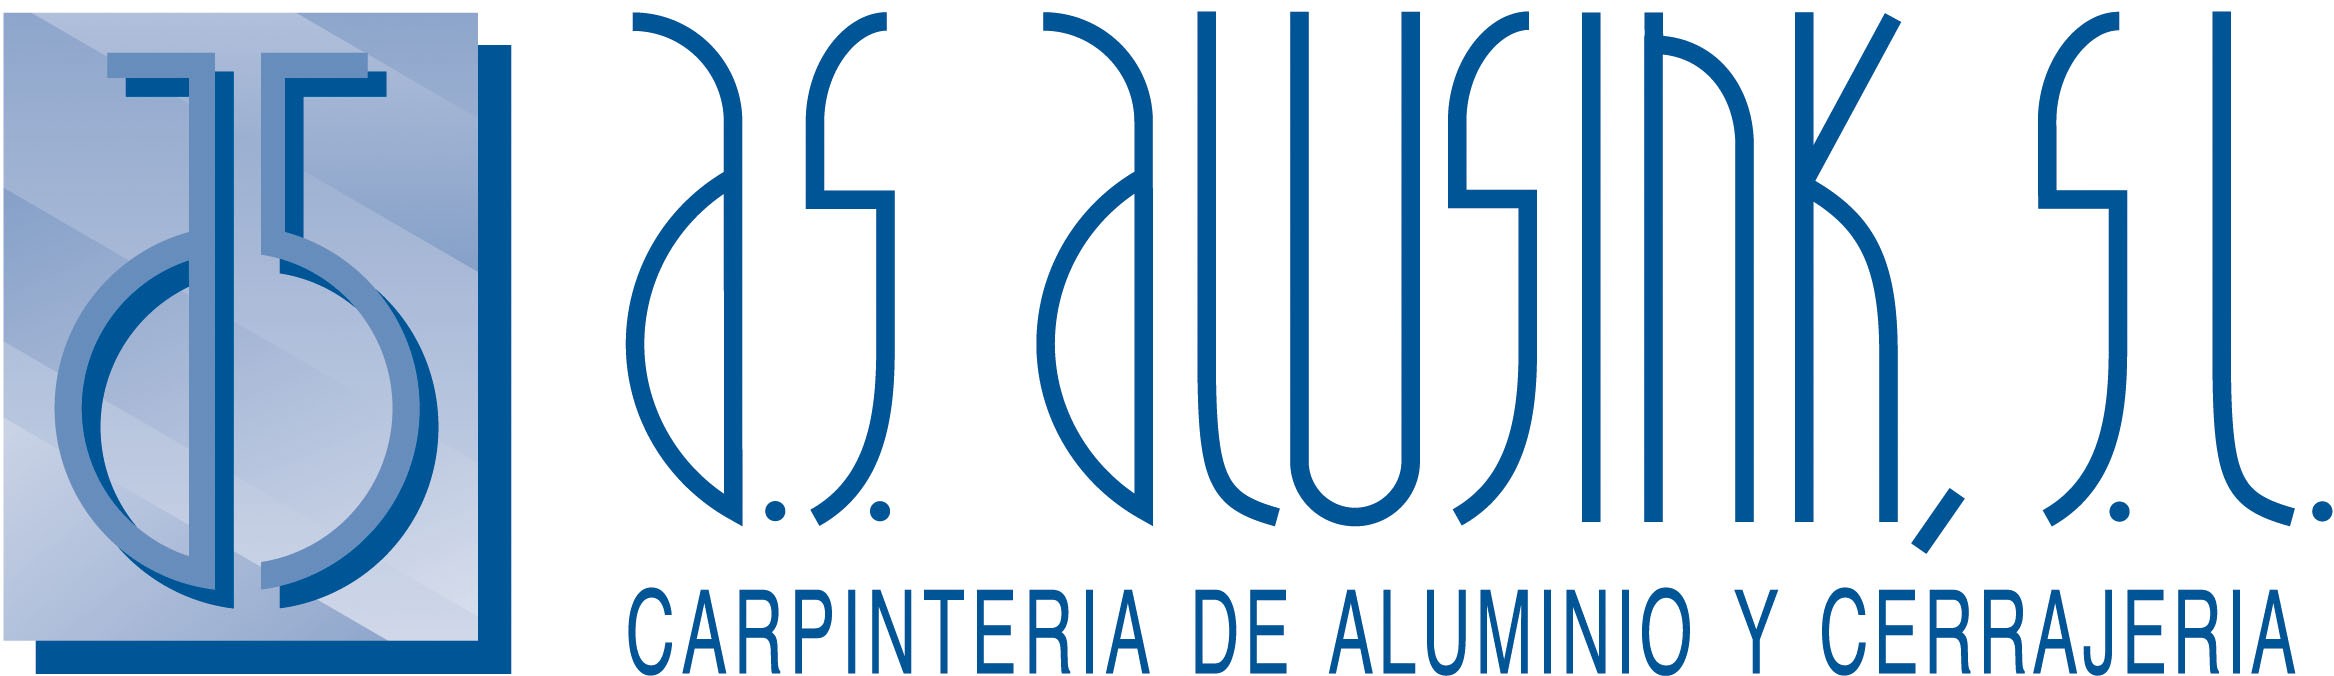 Logo-ALUSINK